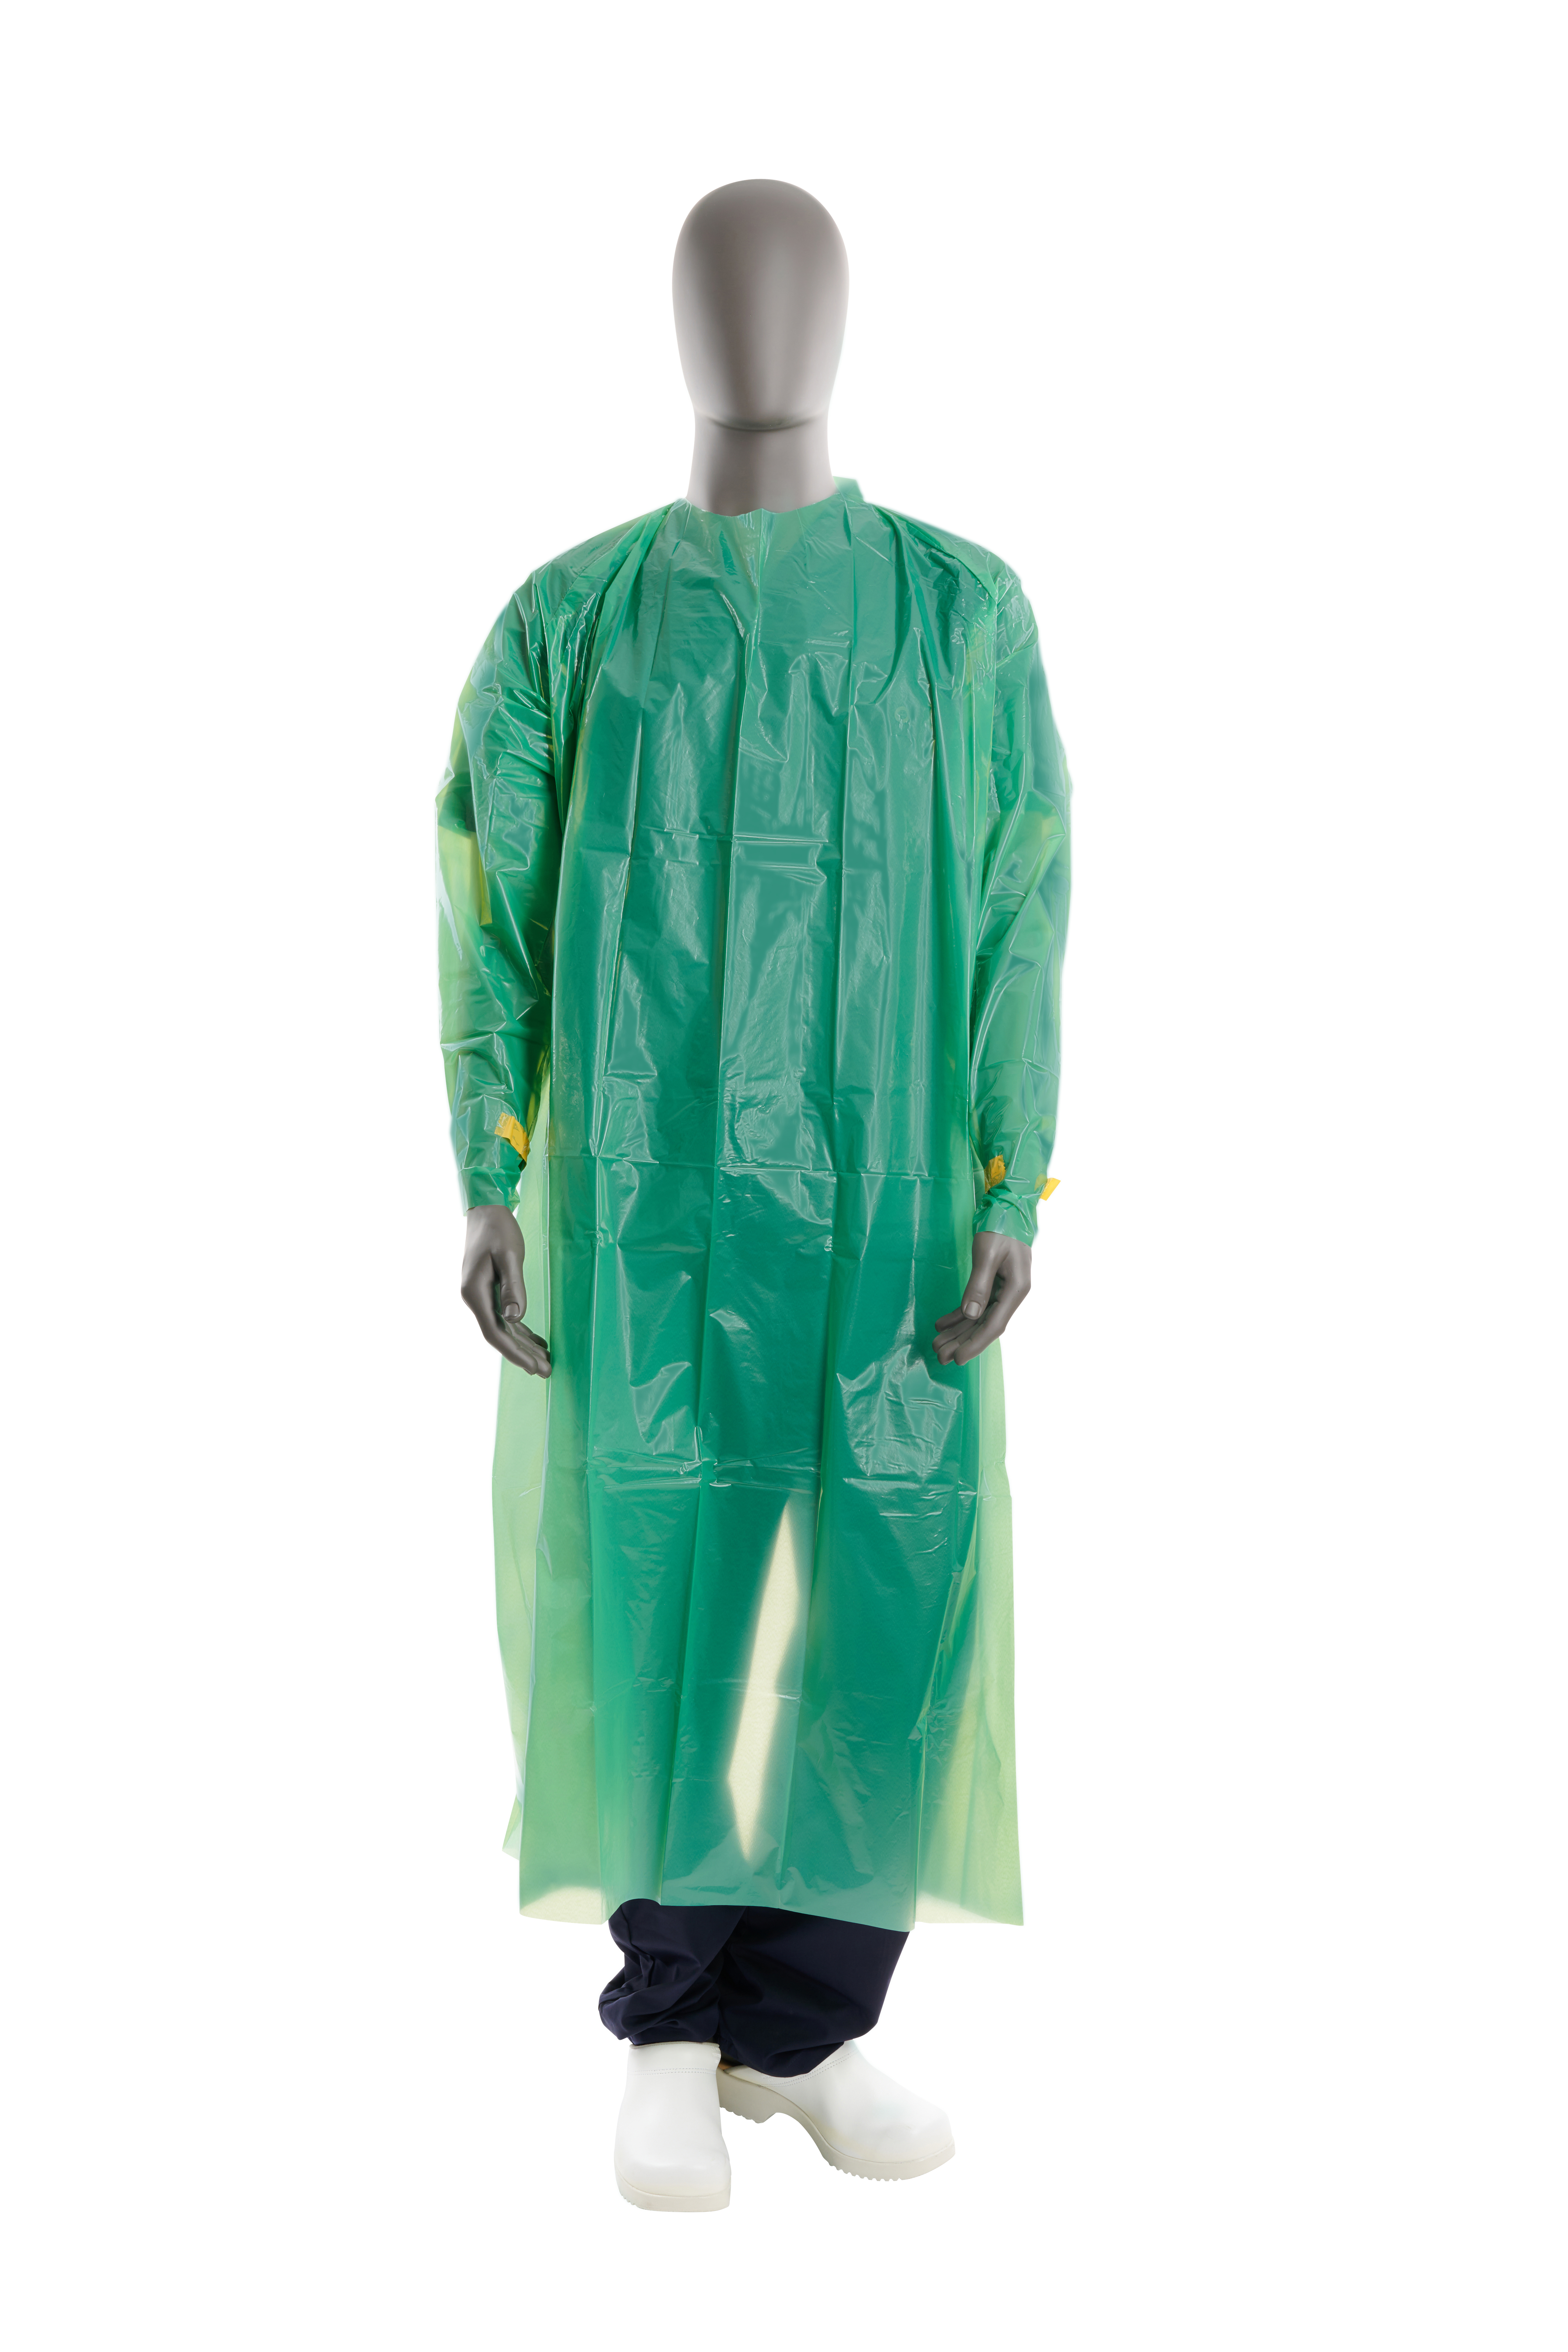 KRUTEX Disposable Coat, green, sterile, 25/pk